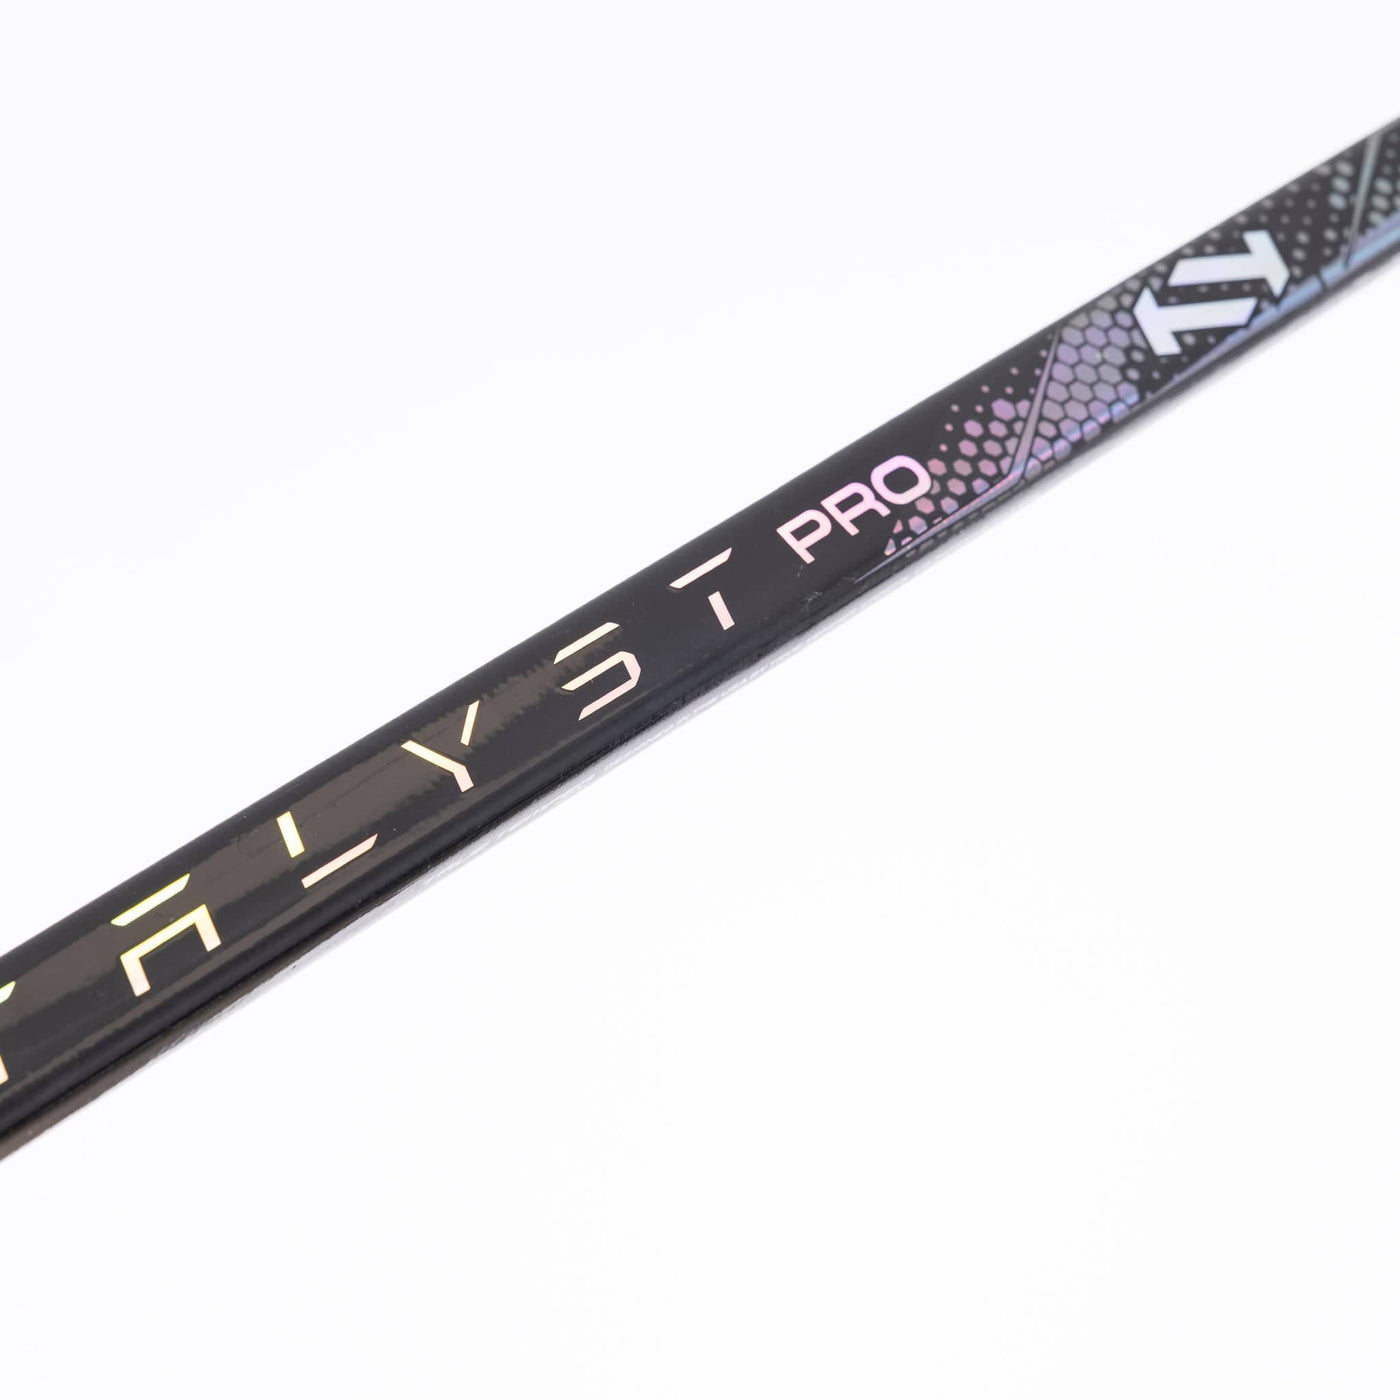 TRUE Catalyst Pro Junior Hockey Stick - 40 Flex - The Hockey Shop Source For Sports